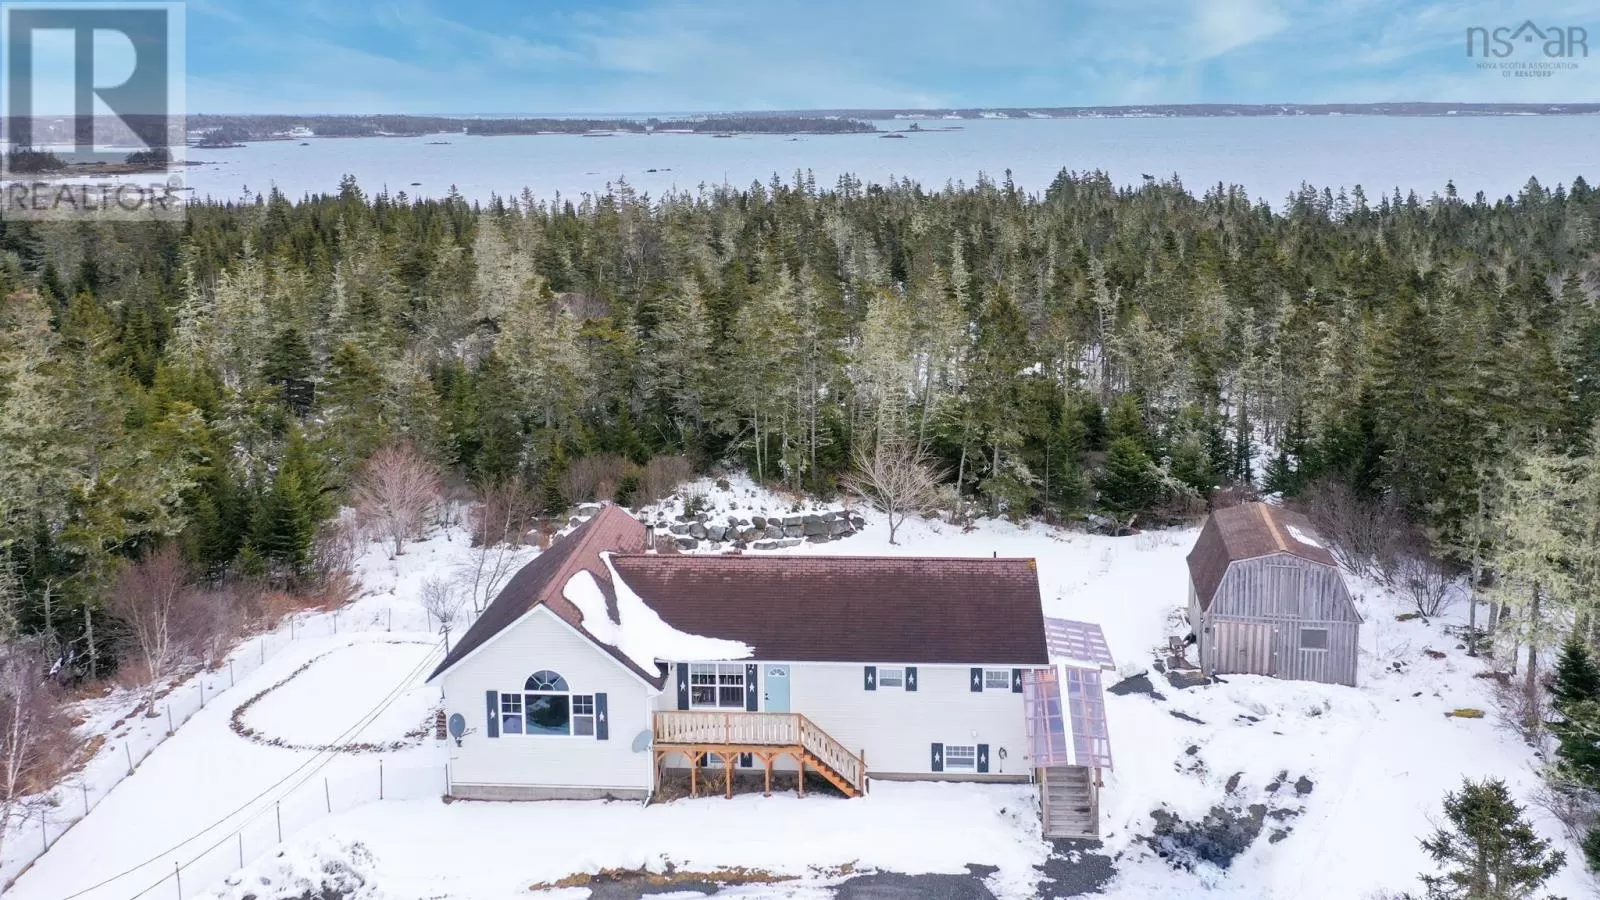 House for rent: 113 Bear Point Road, Shag Harbour, Nova Scotia B0W 3B0